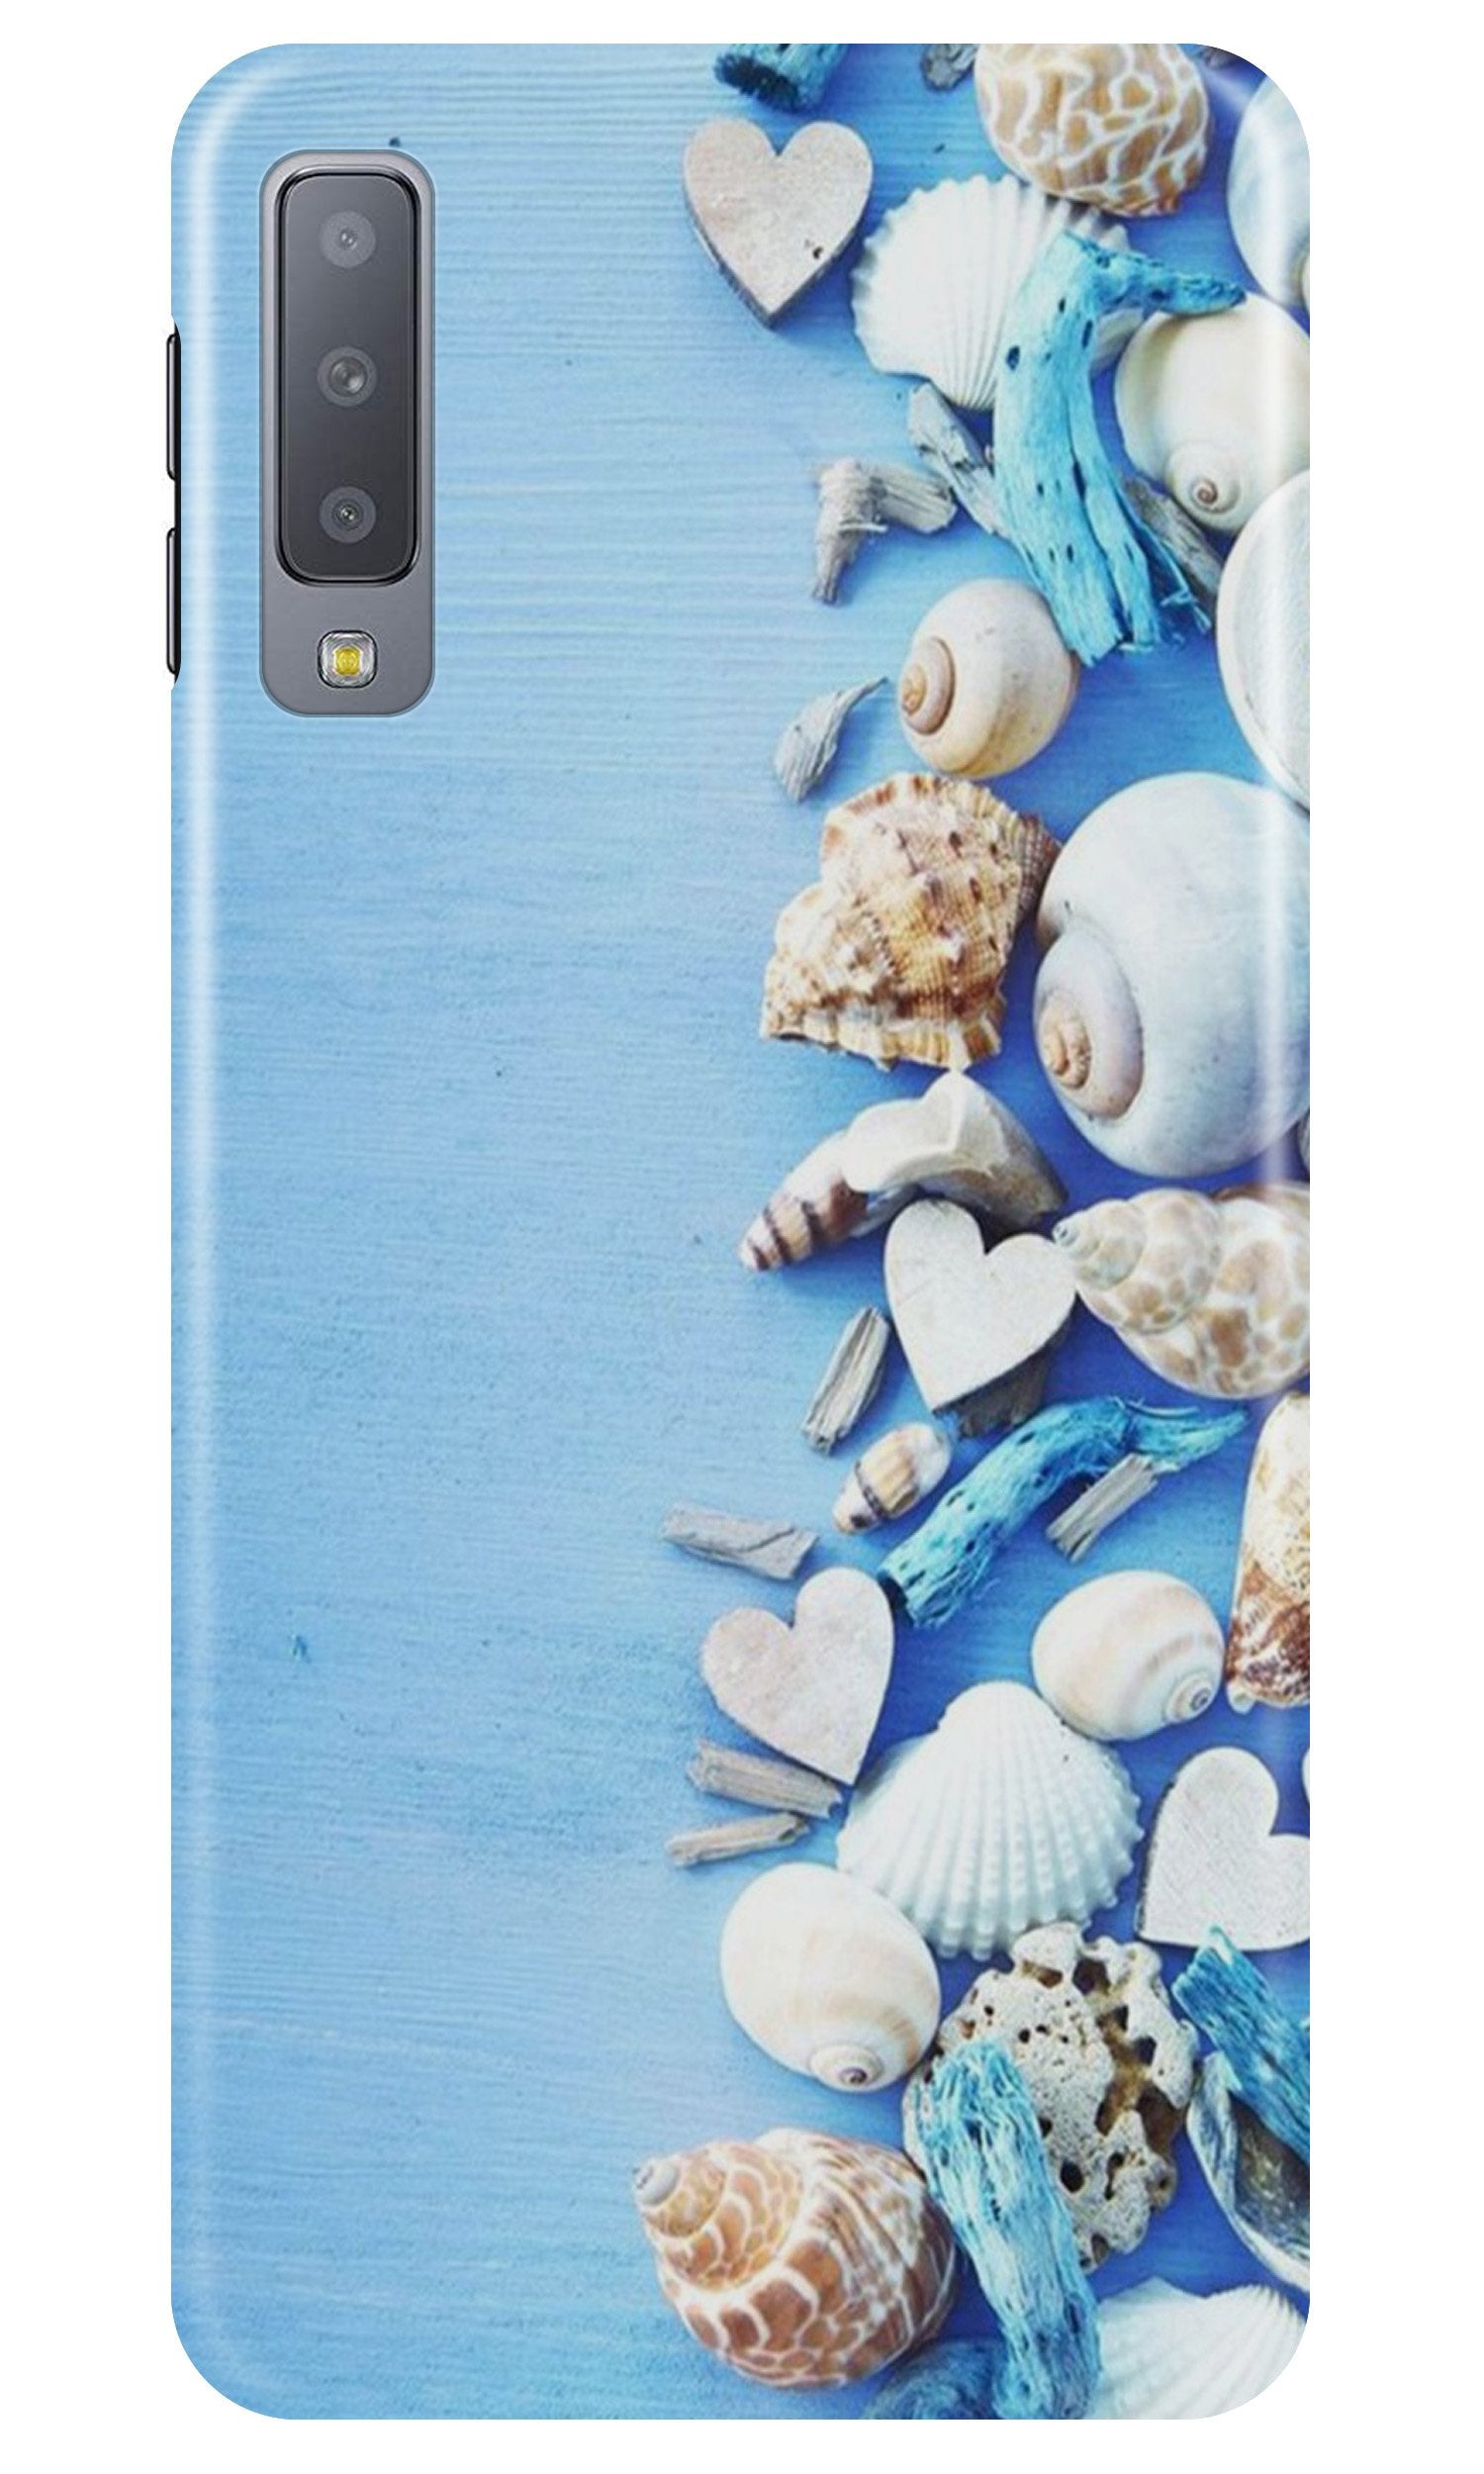 Sea Shells2 Case for Samung Galaxy A70s